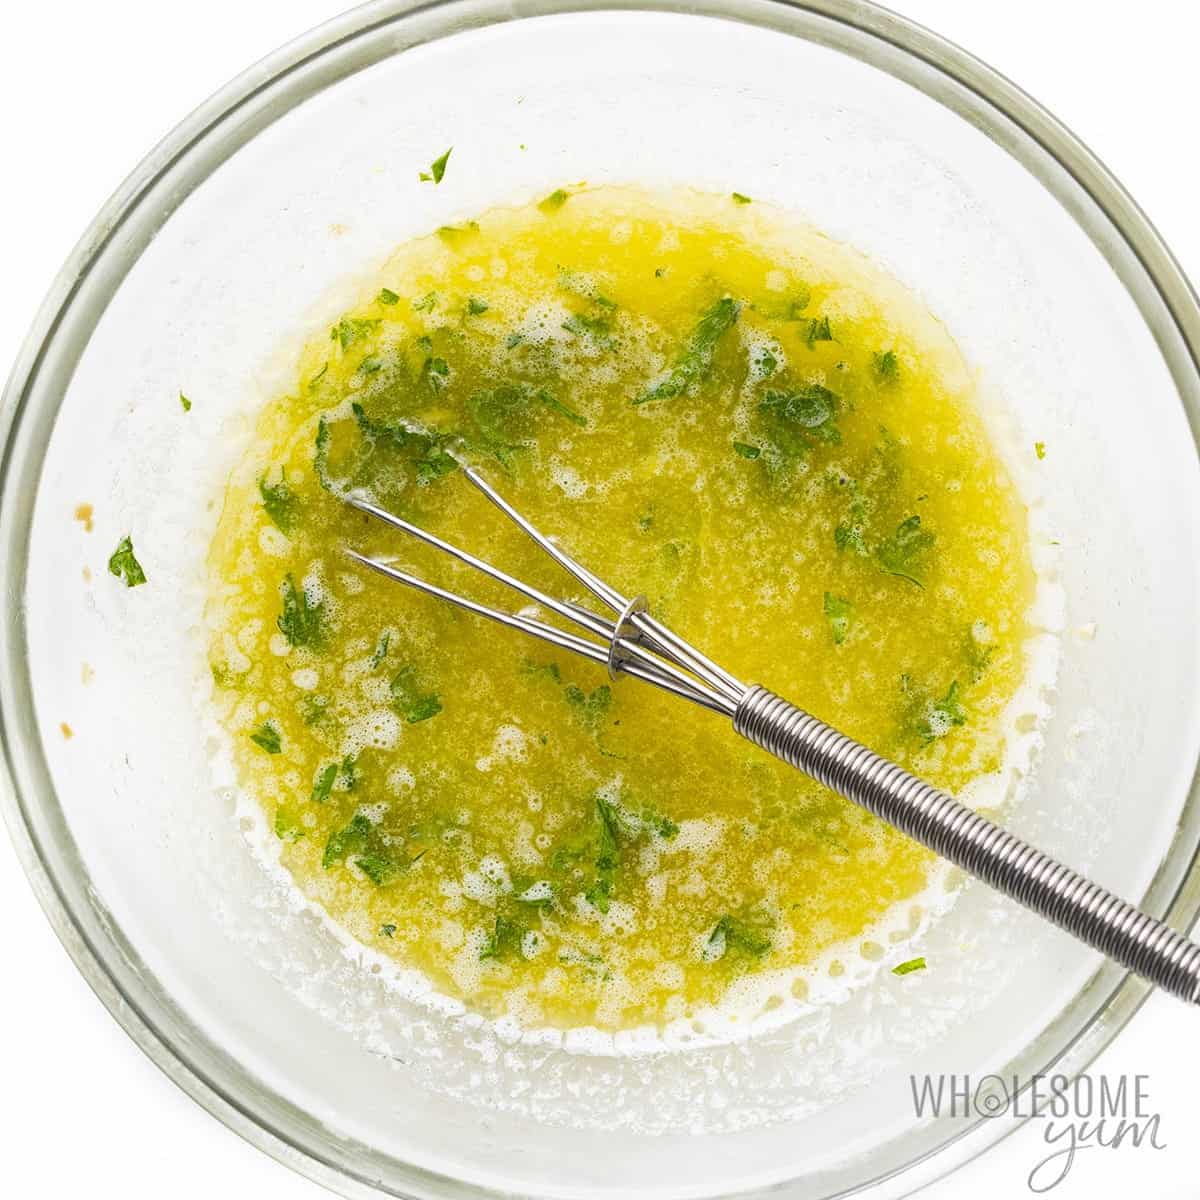 Lemon butter sauce in a glass bowl